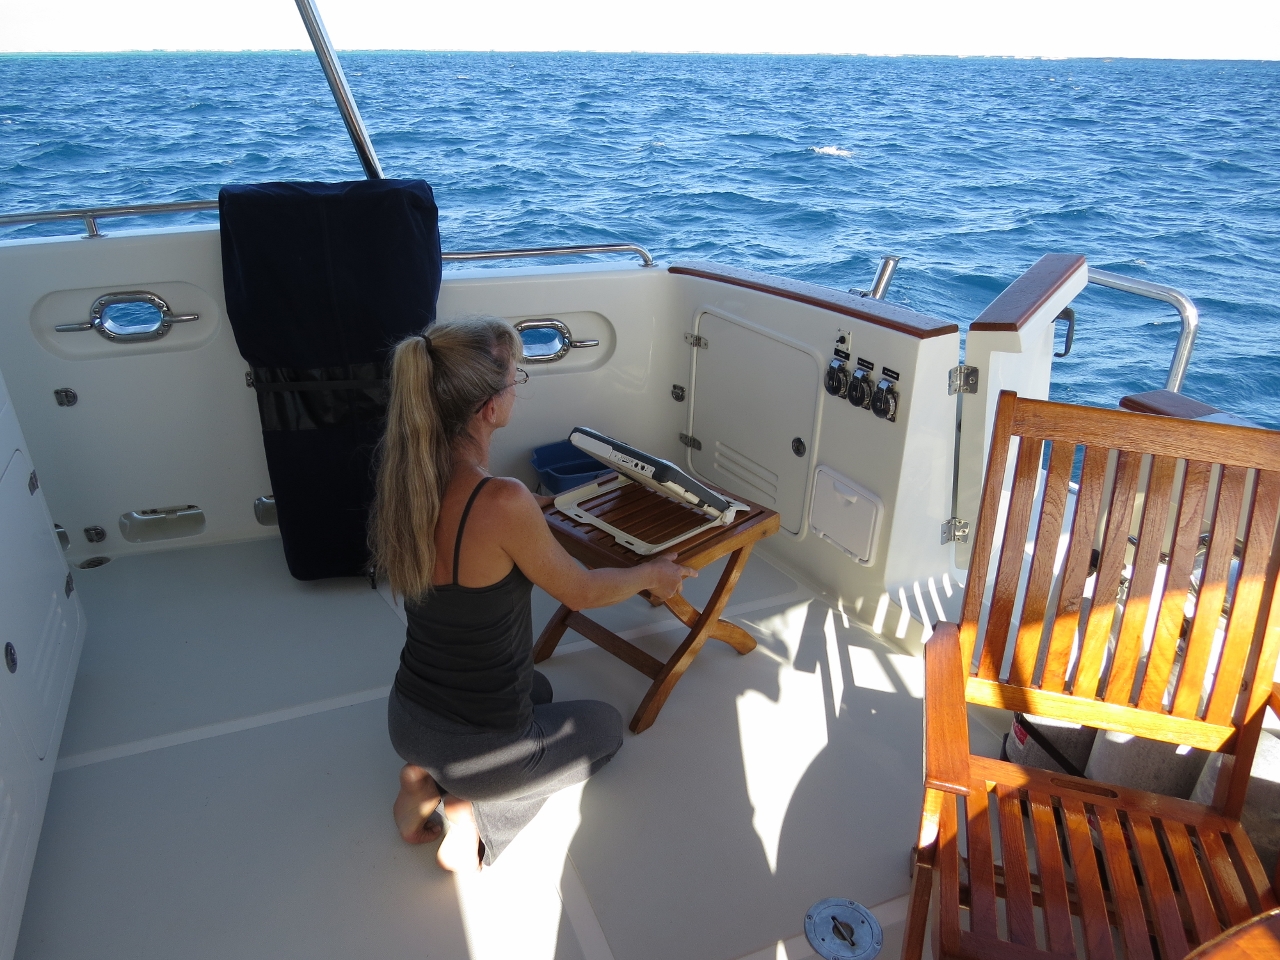 Leisure Boating  Iridium Satellite Communications